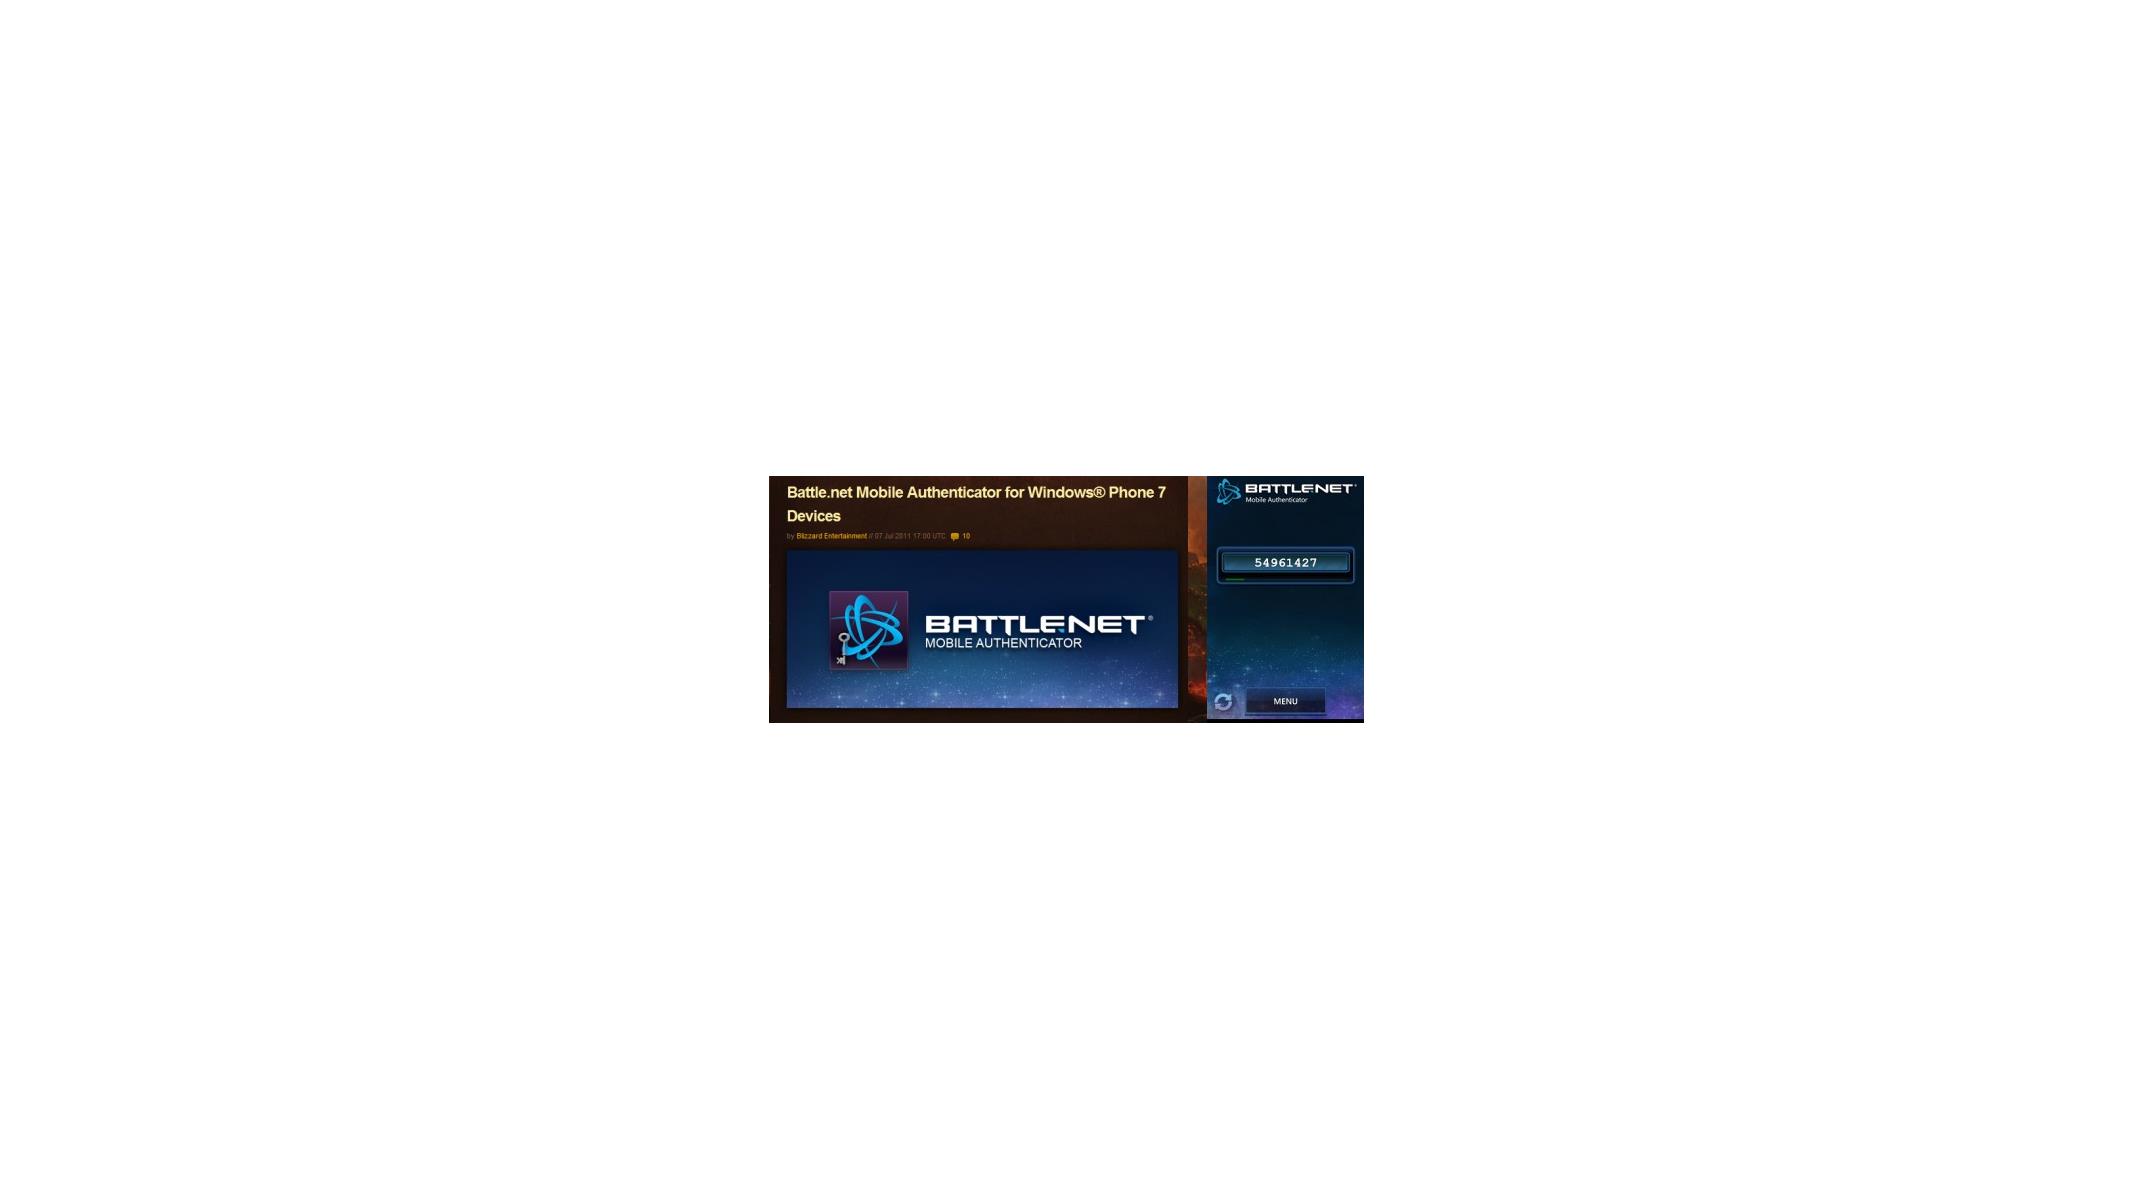 Blizzard Support - Battle.net Authenticator